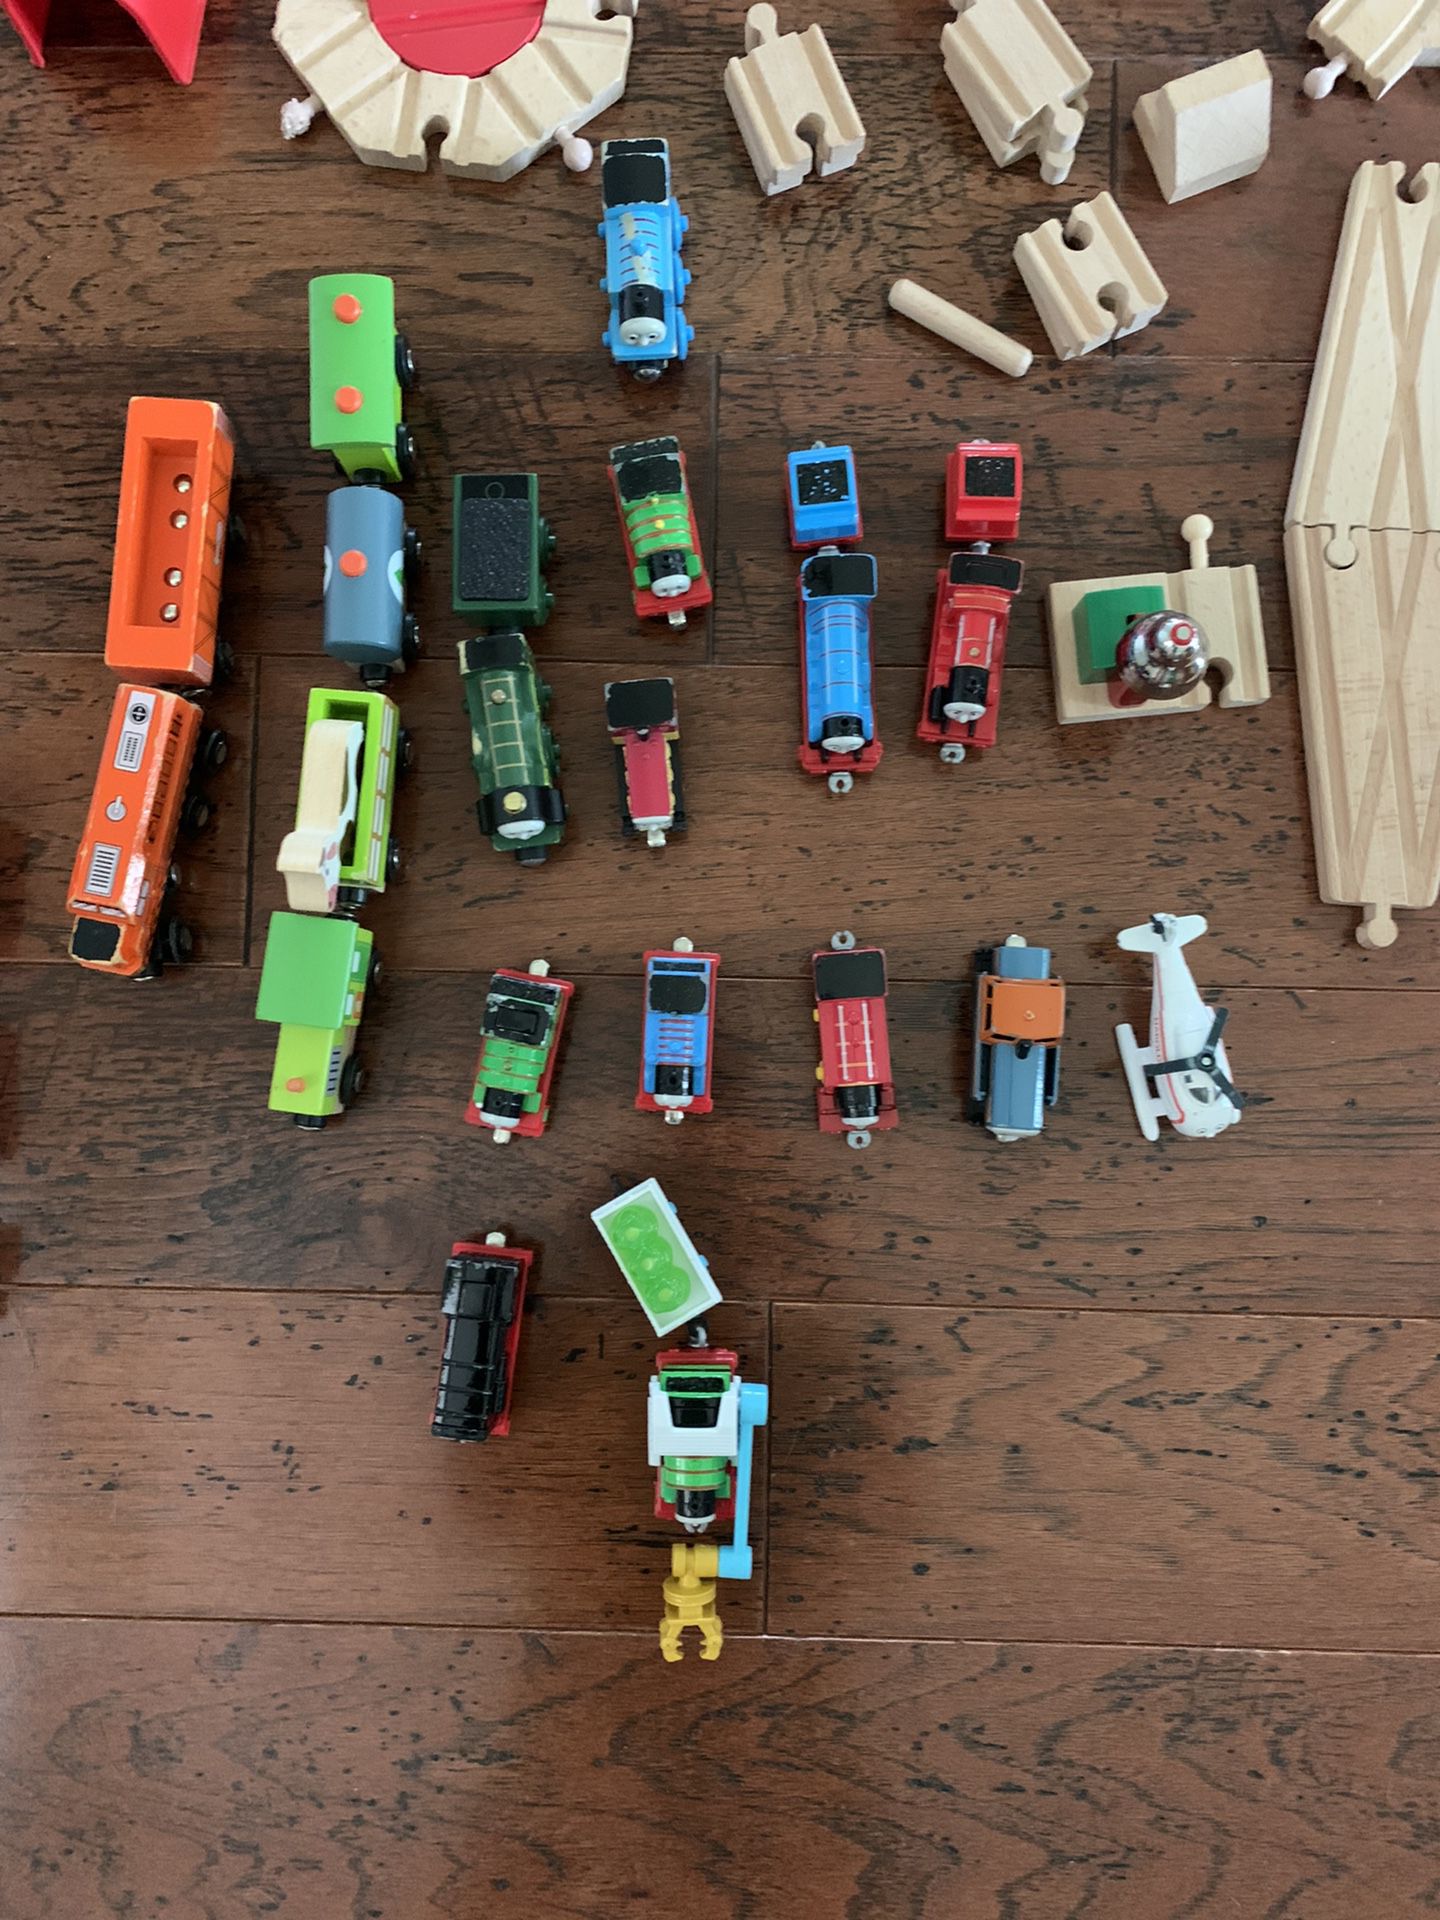 91 Piece, Thomas & Friends, Mellisa & Doug, Ikea Train set Toys  (Cleaned & Sanitized)